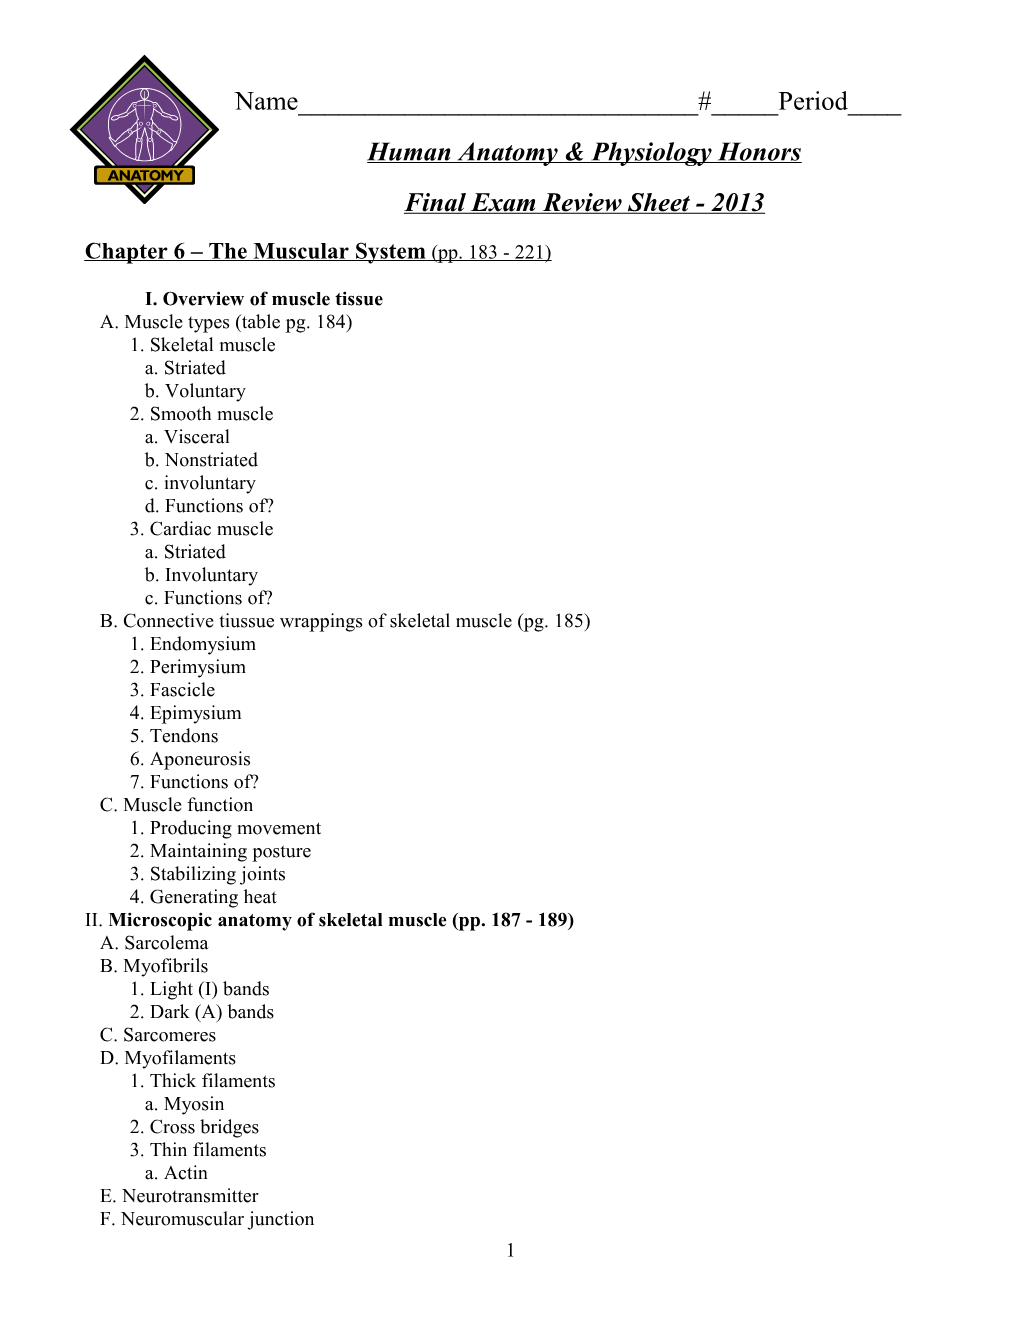 Human Anatomy & Physiology - Final Exam Review Sheet